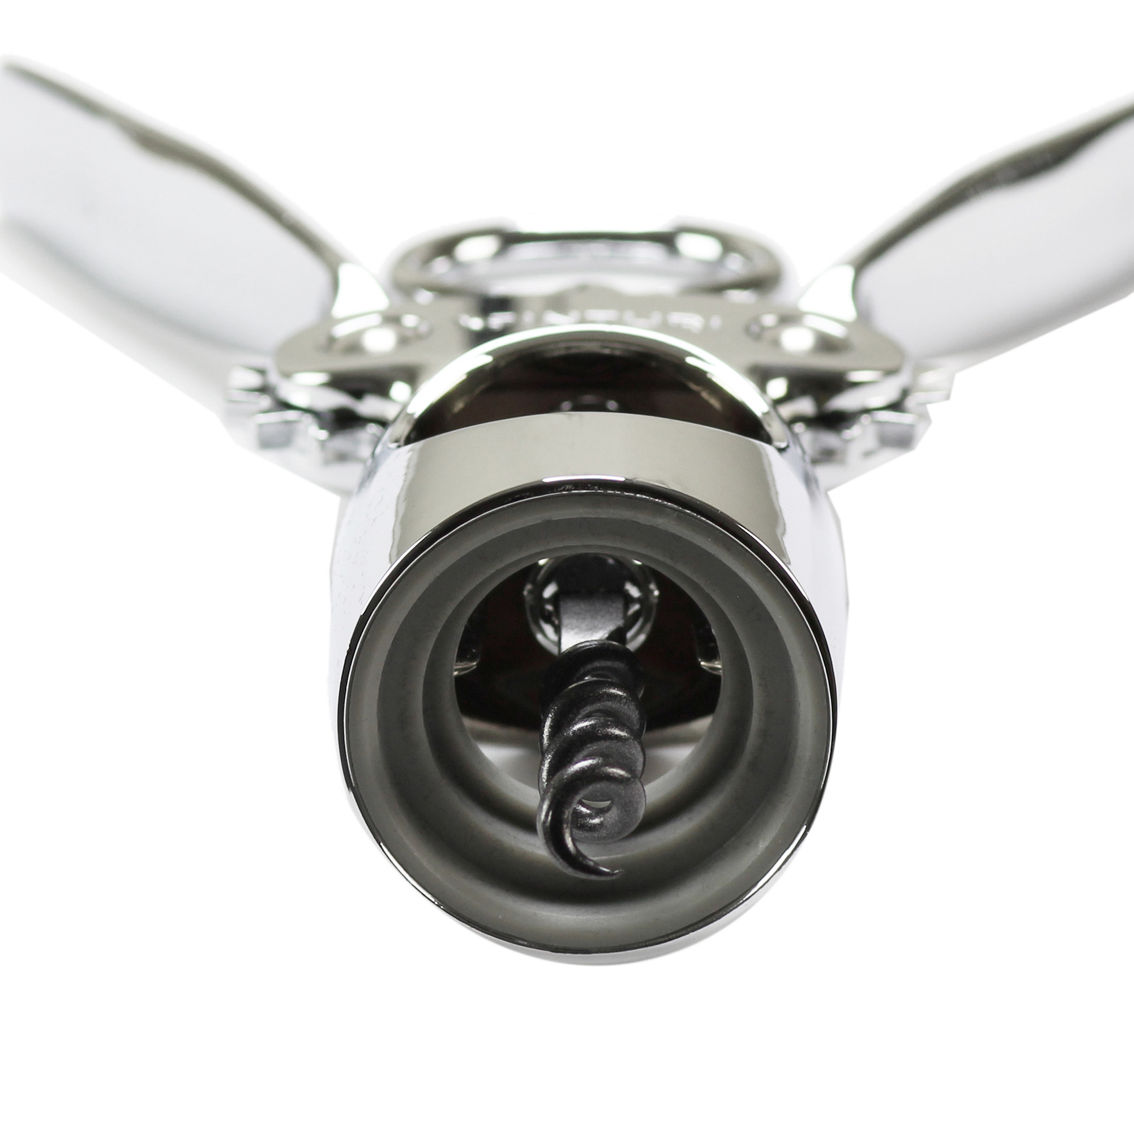 Vinturi Winged Corkscrew Wine Opener with Gift Box - Image 4 of 4